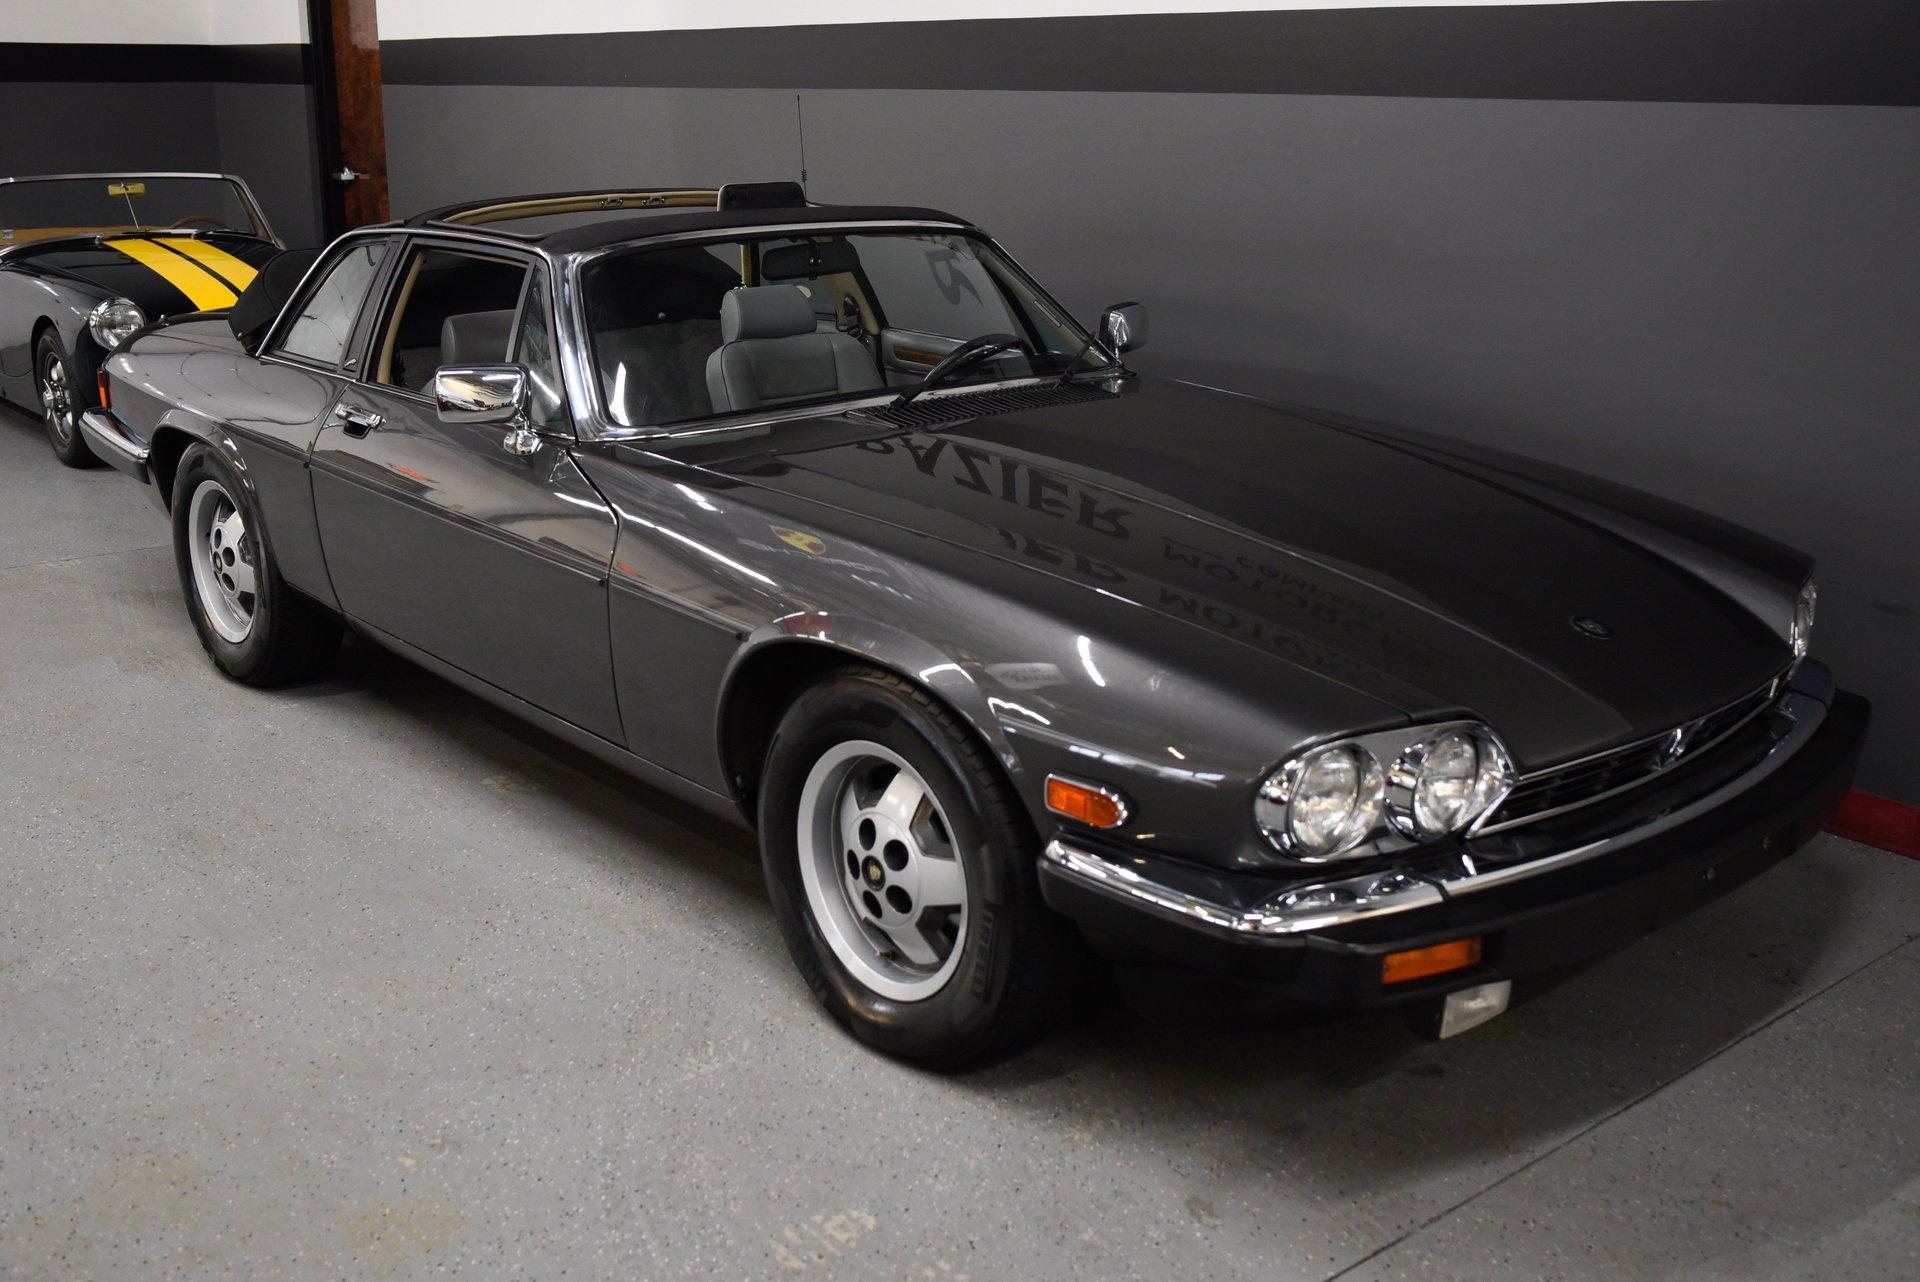 136741 | 1986 Jaguar XJSC | Frazier Motorcar Company